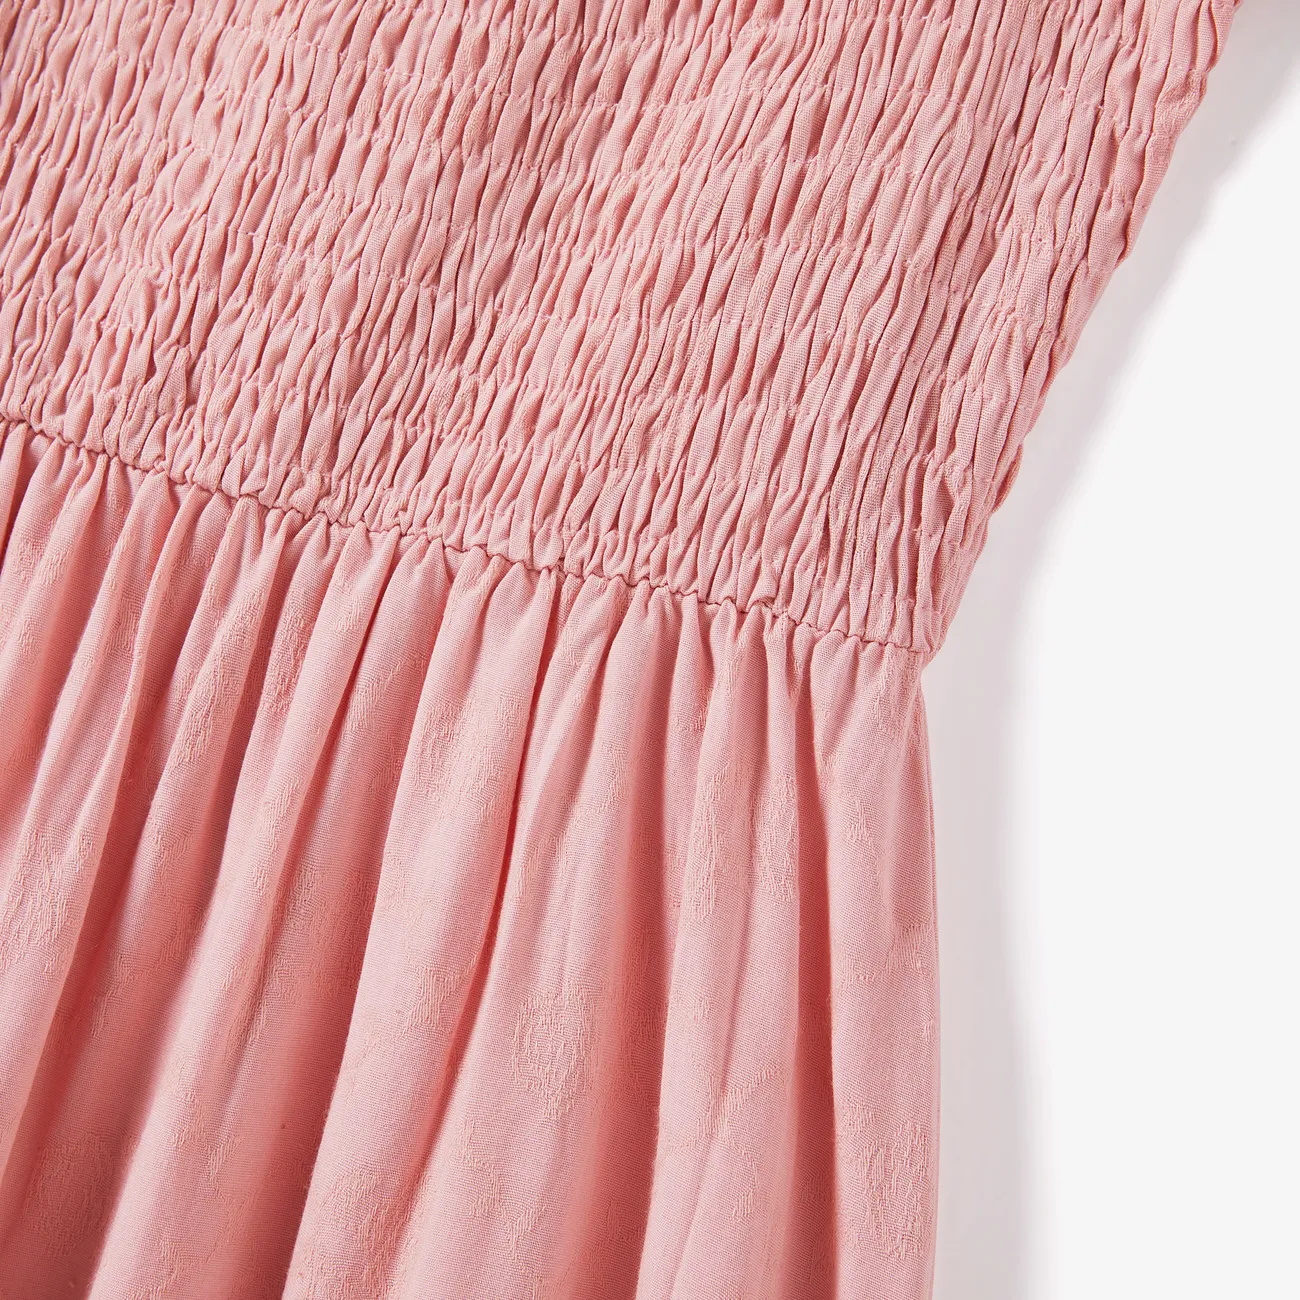 Family Matching Color Block Polo Shirt and Pink Shirred Top Bubble Sleeves Dress Sets Pink big image 1